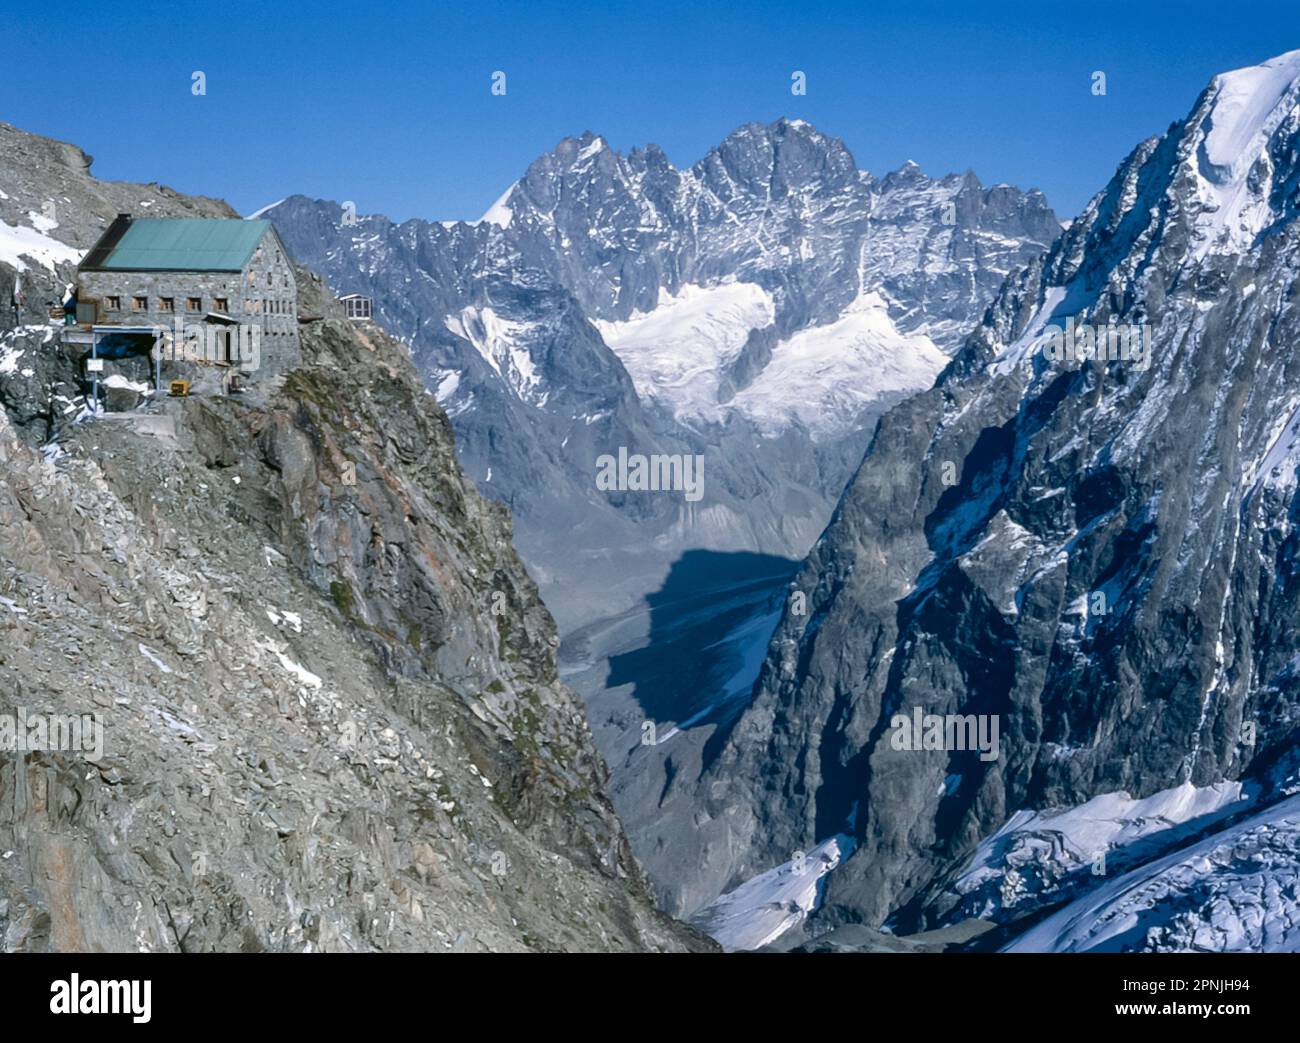 The Swiss Alpine Club hut Cabane Vignettes on the Chamonix to Zermatt Haute Route Stock Photo